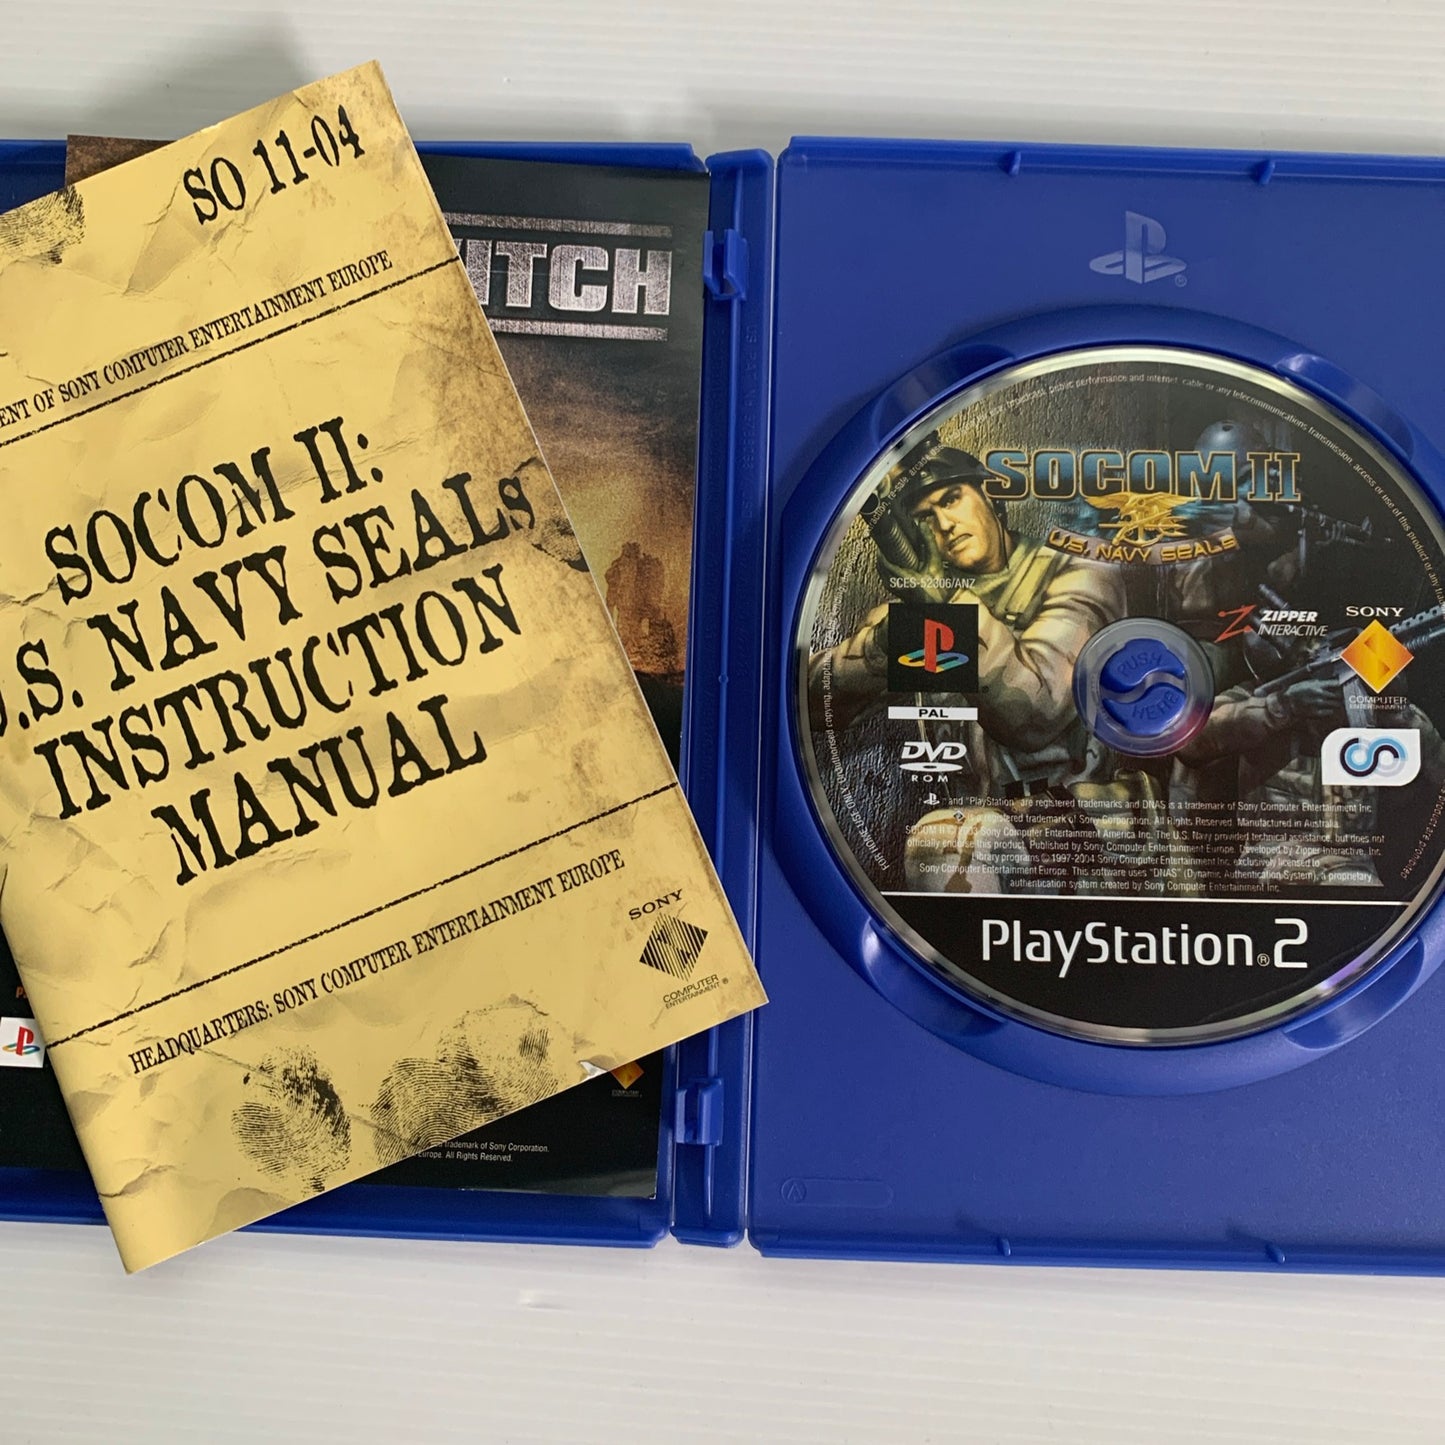 SOCOM II US Navy Seals PlayStation 2 PS2 Game